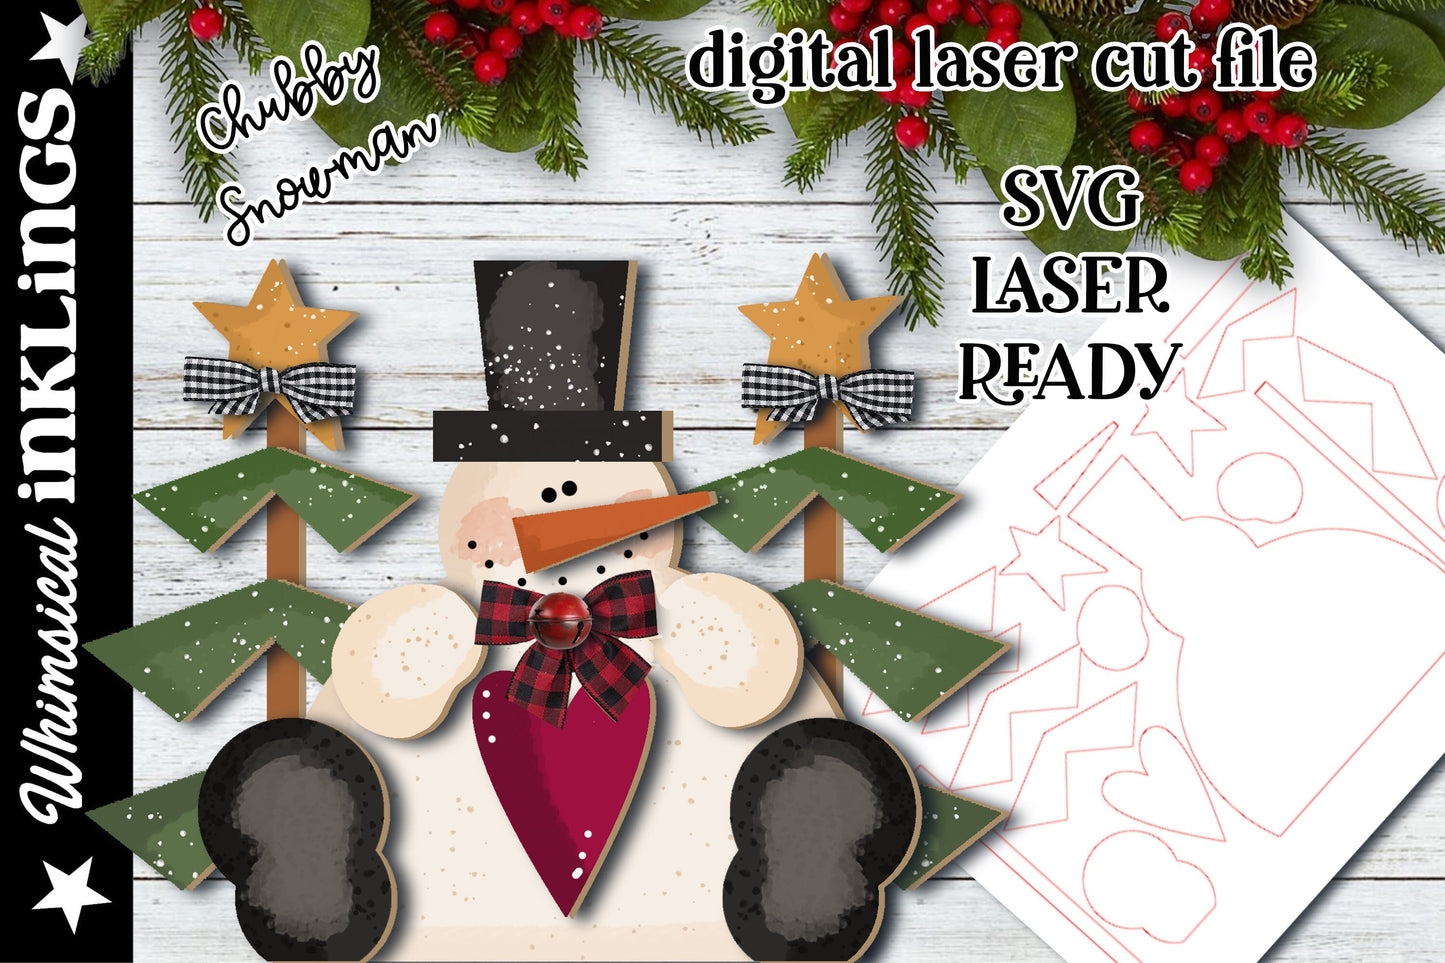 Chubby Snowman SVG |Laser Ready Snowman| Glow forge Christmas Ornament| Glowforge Snowman